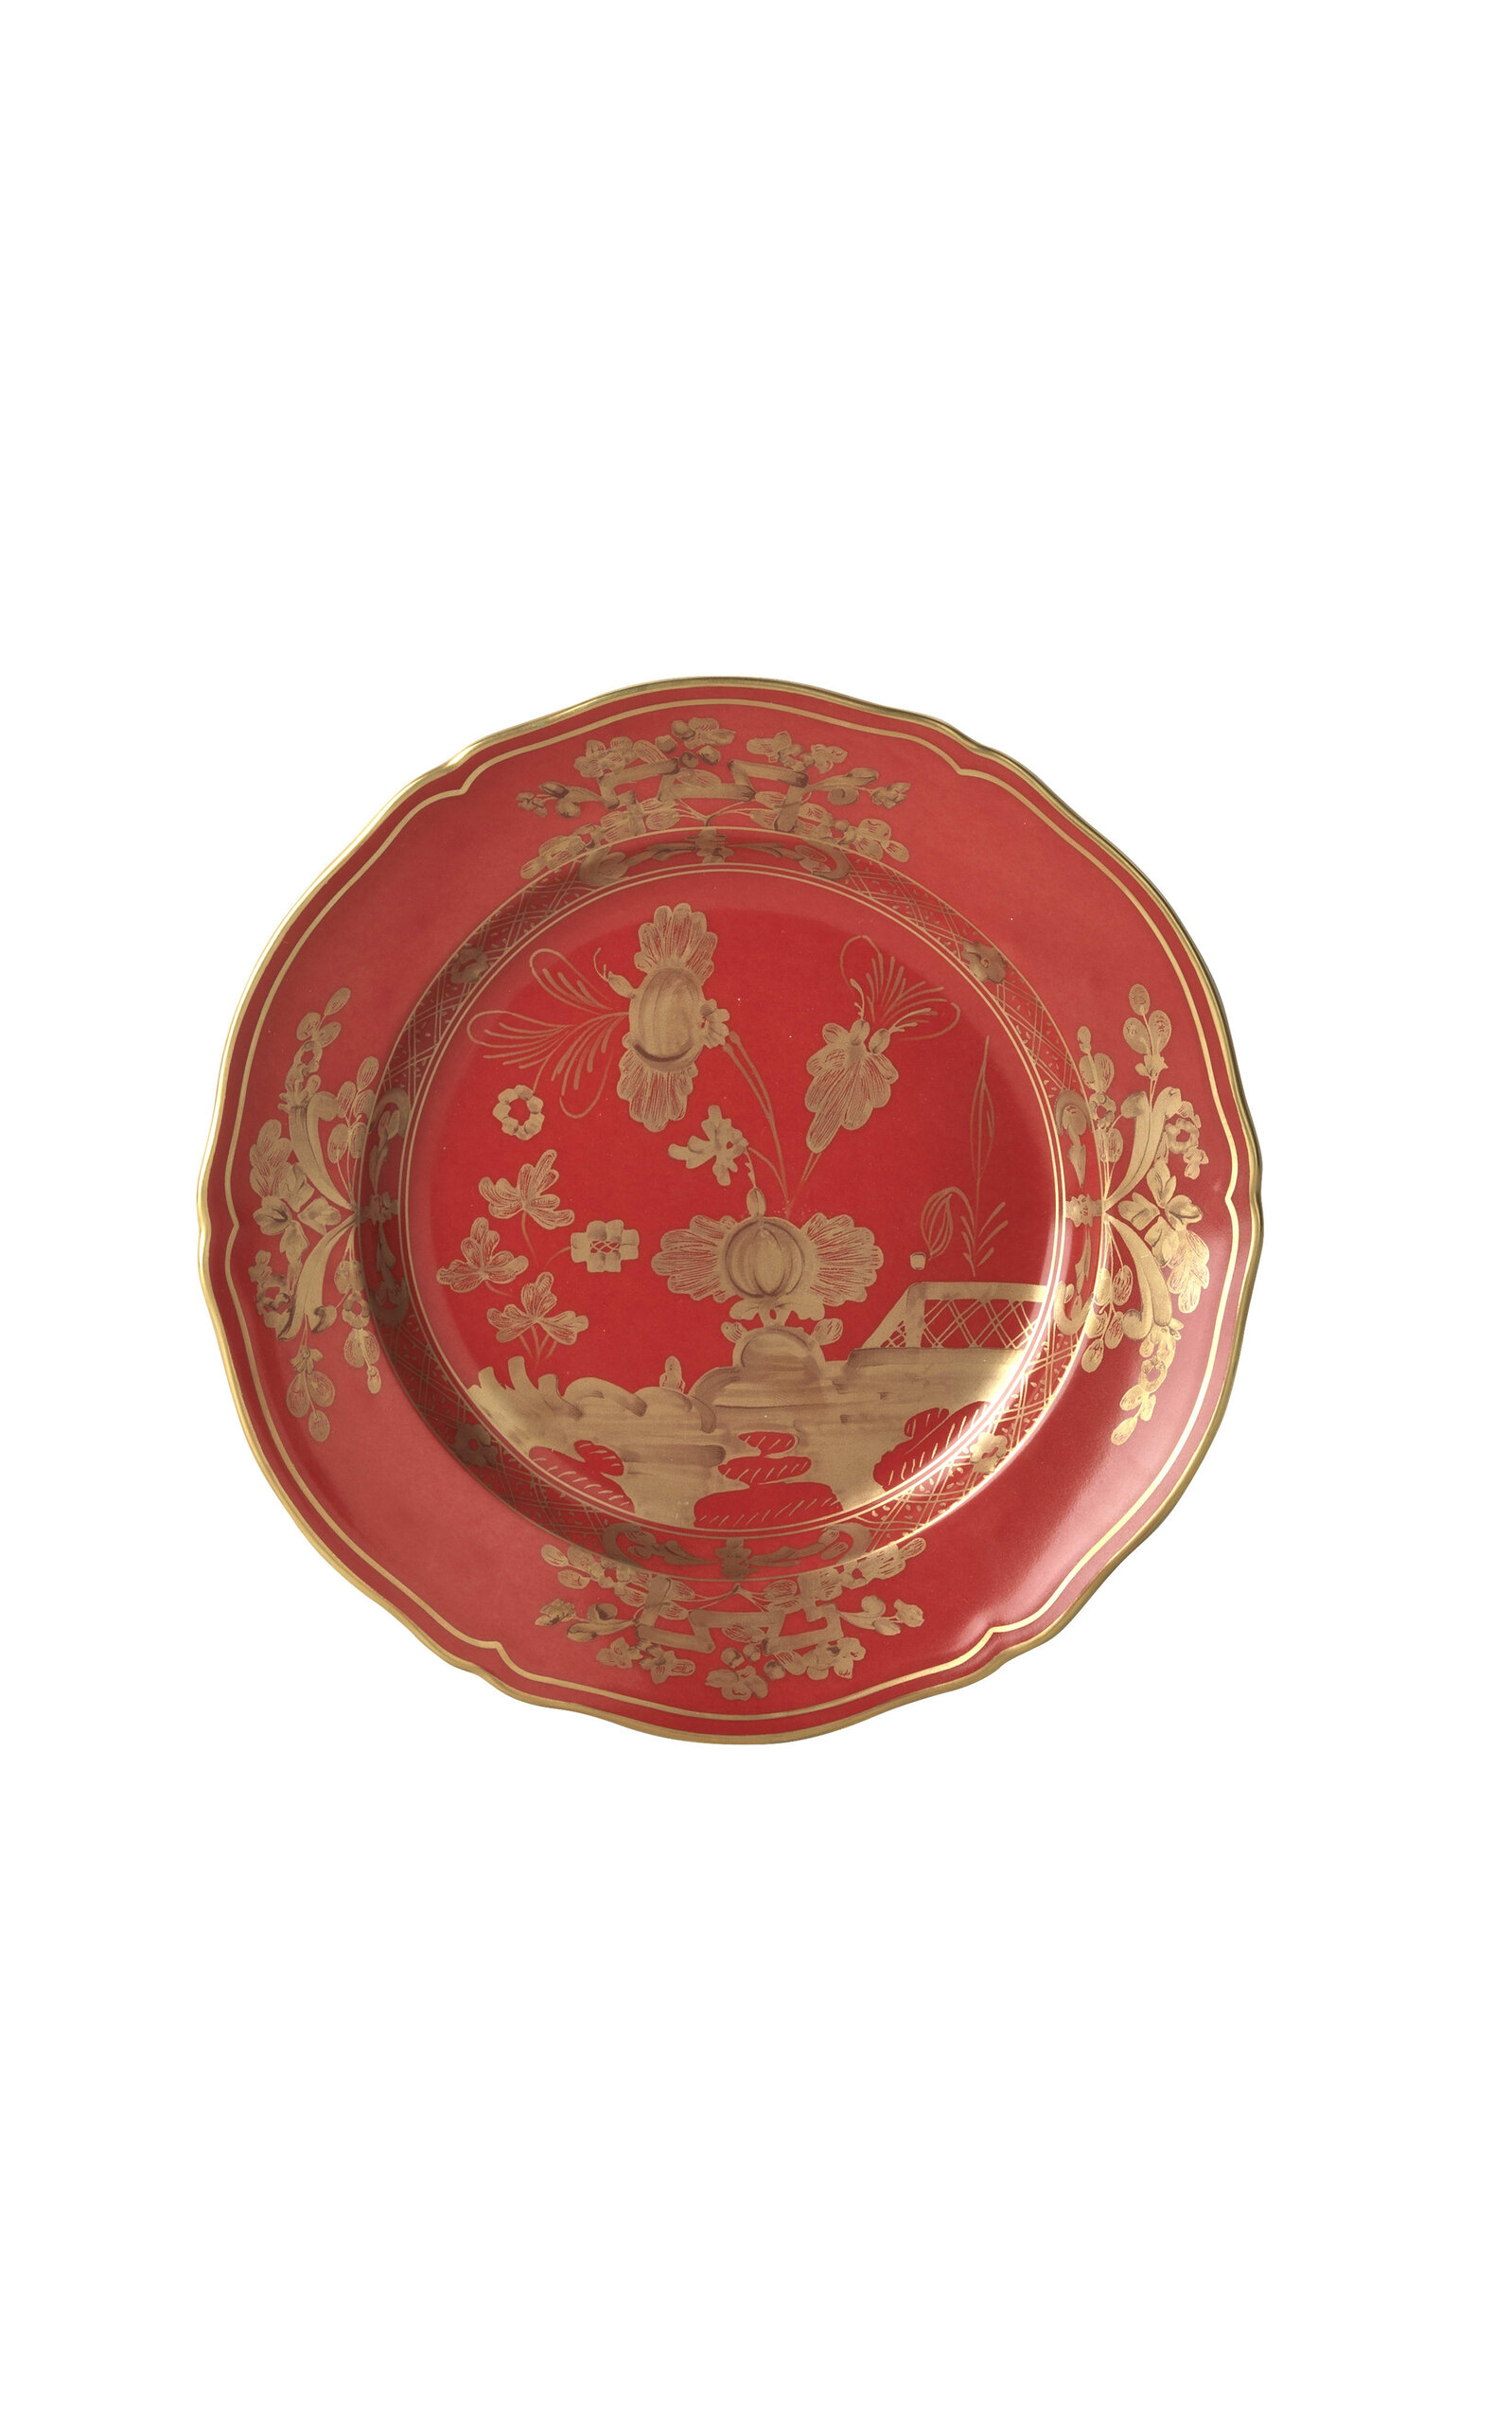 Ginori 1735 Antico Doccia Porcelain Dessert Plate In Red